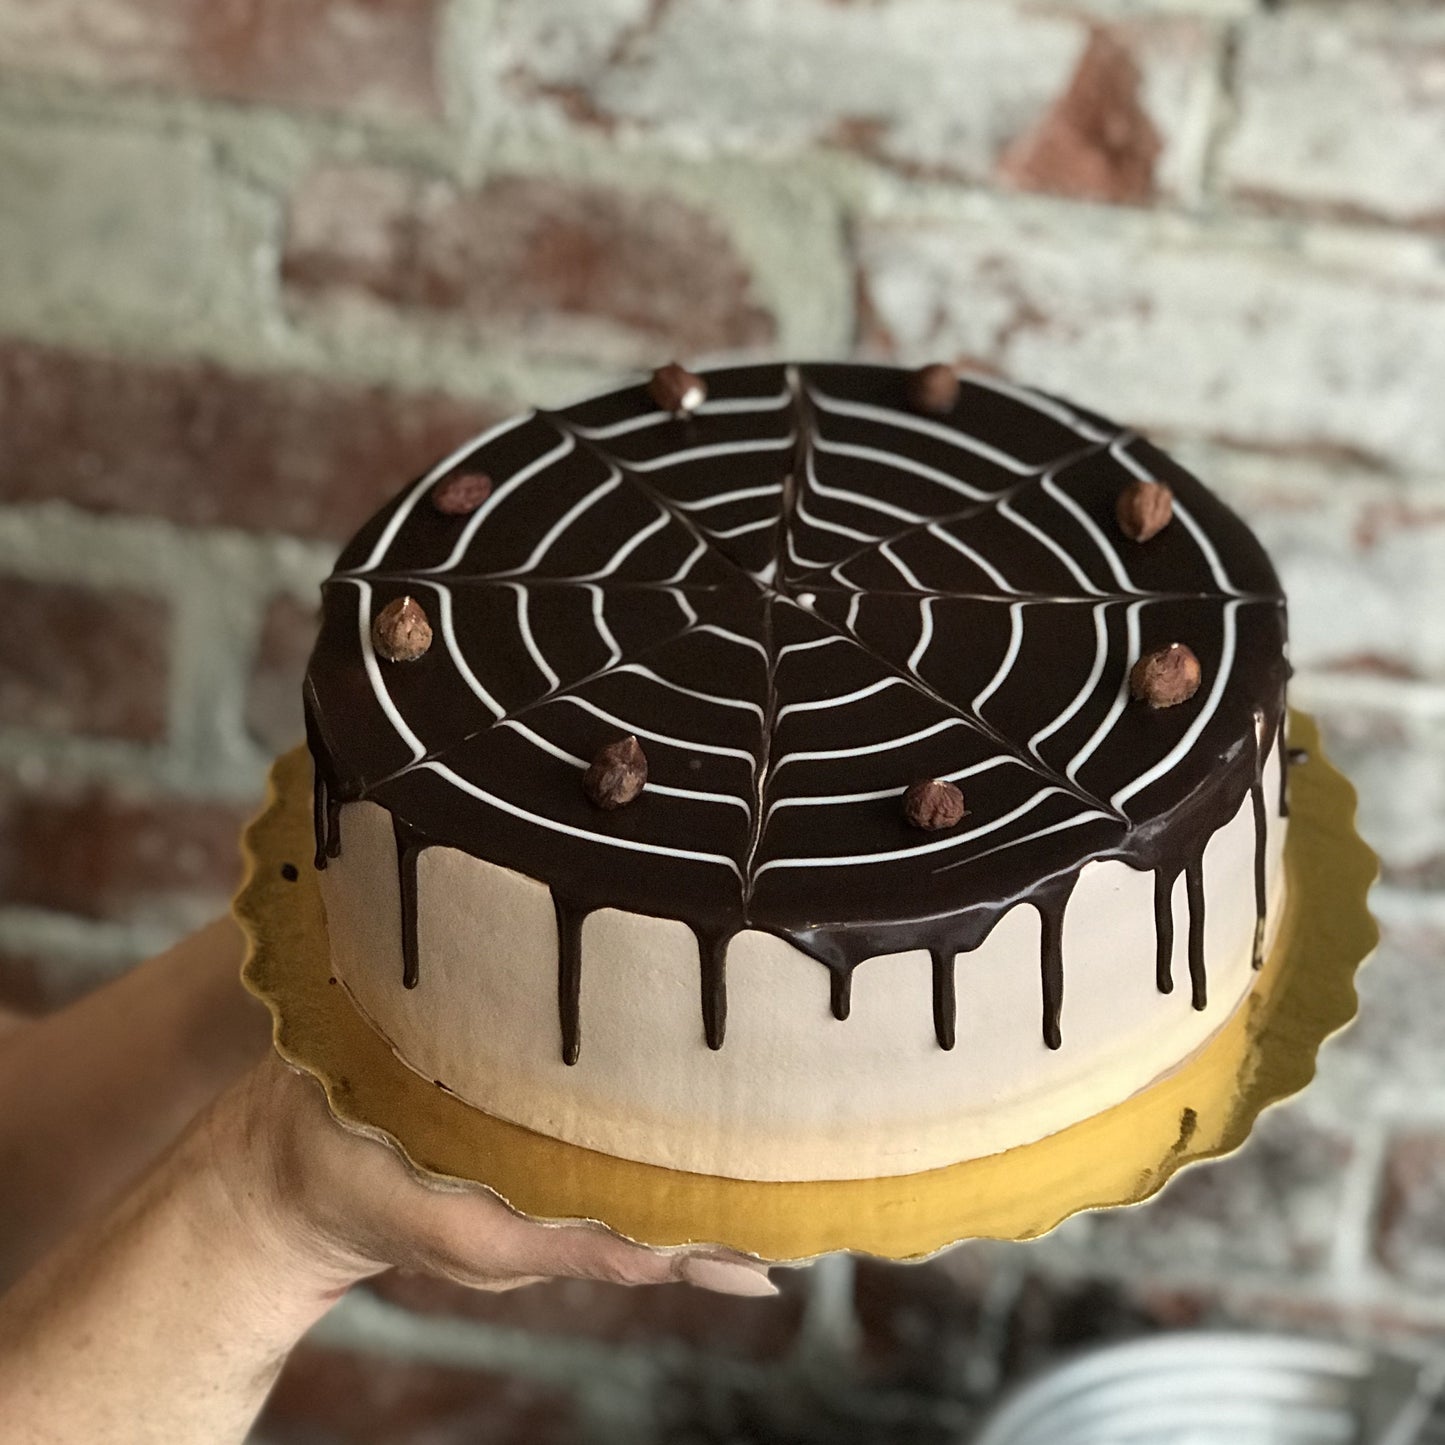 Chocolate cake with chocolate drip